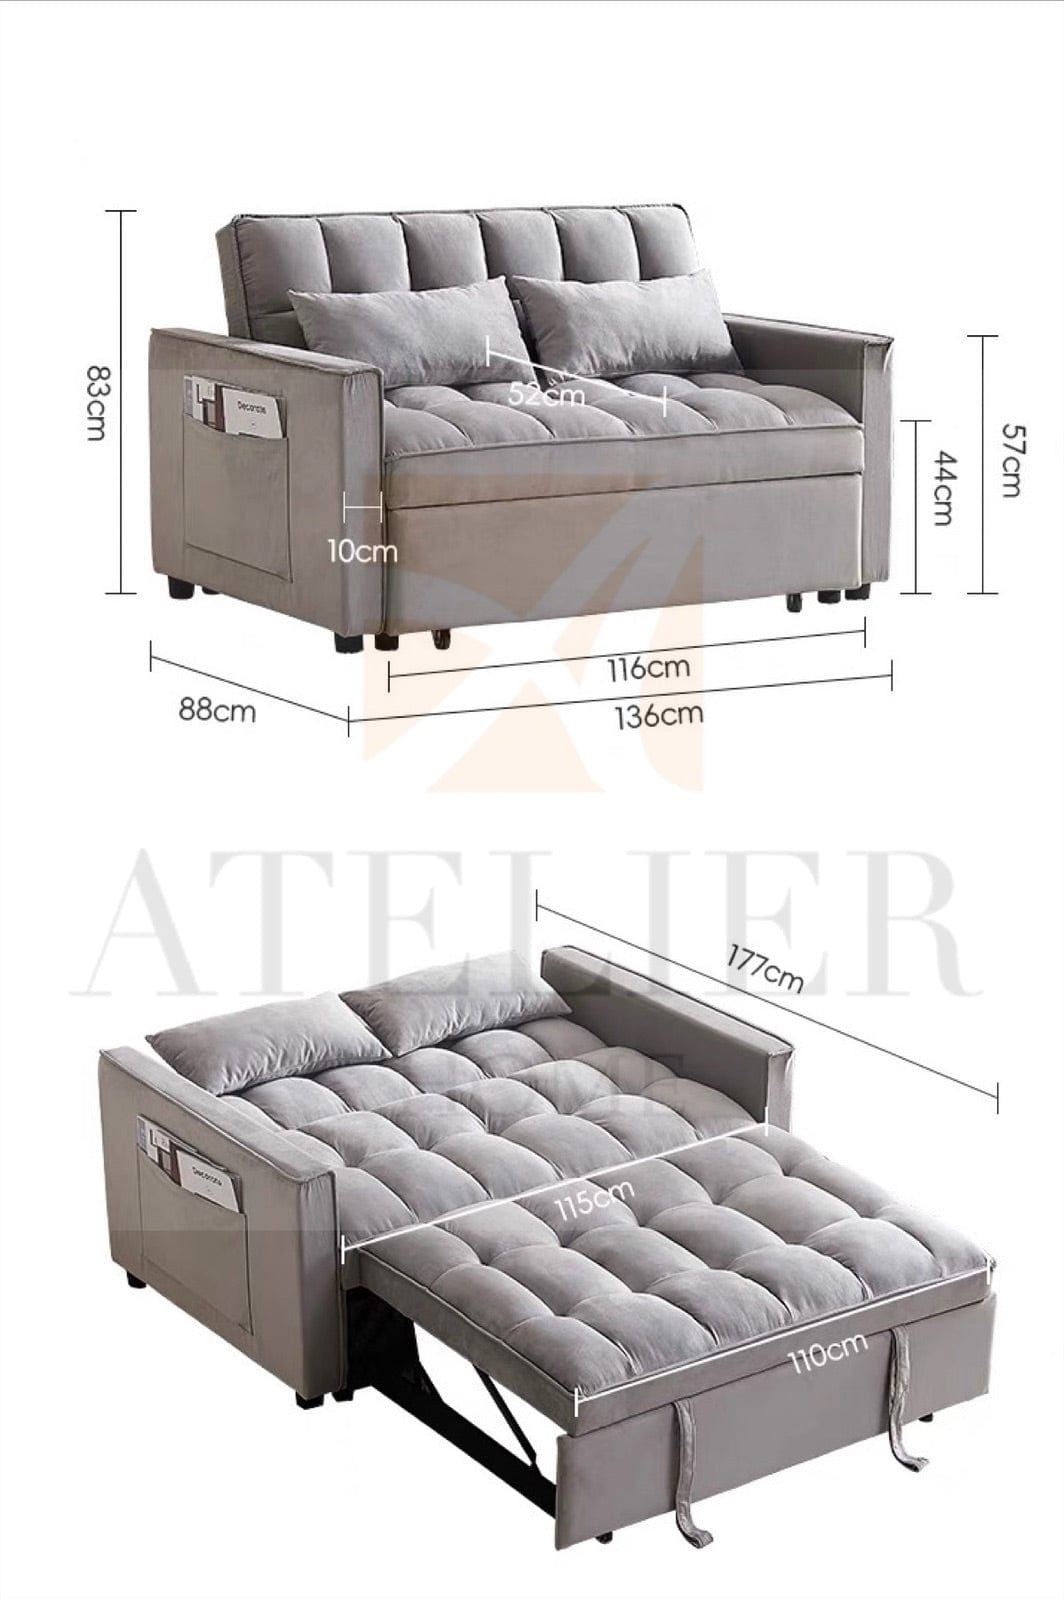 Home Atelier Italian Velvet Fabric / Super Single Size/ Length 136cm Roland Pull-out Sofa Bed